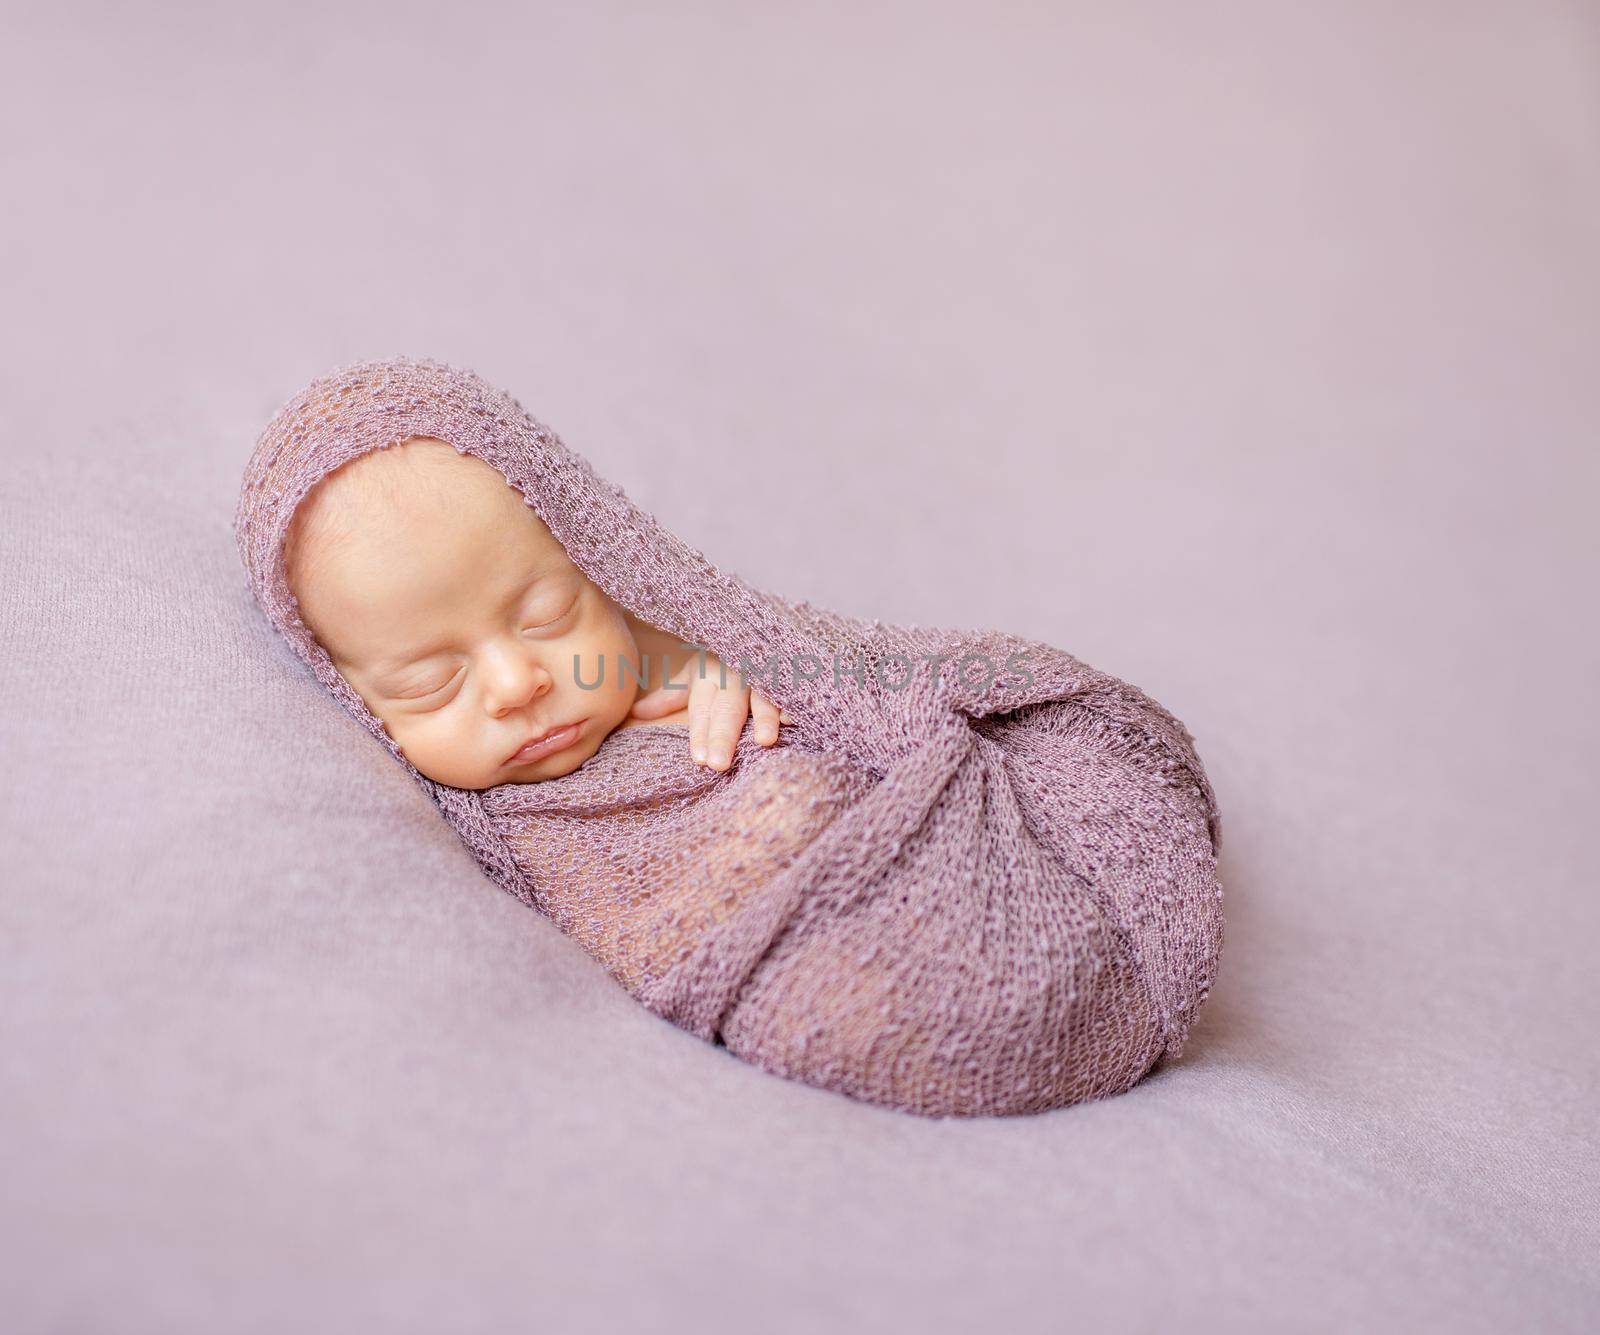 lovely newborn swaddled in pink diaper by tan4ikk1